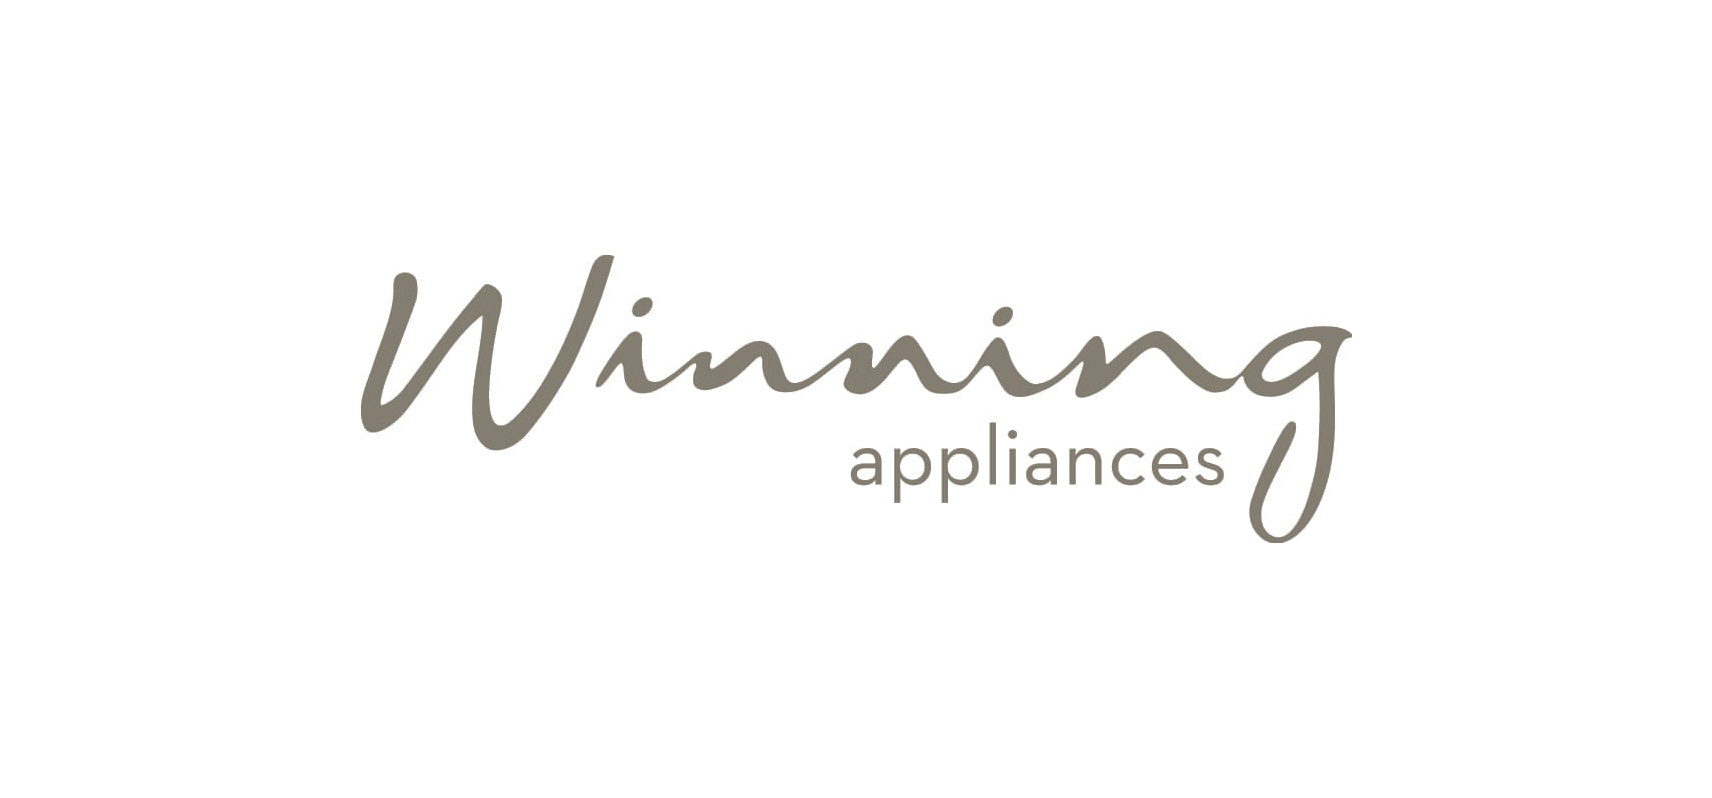 winning appliances.png